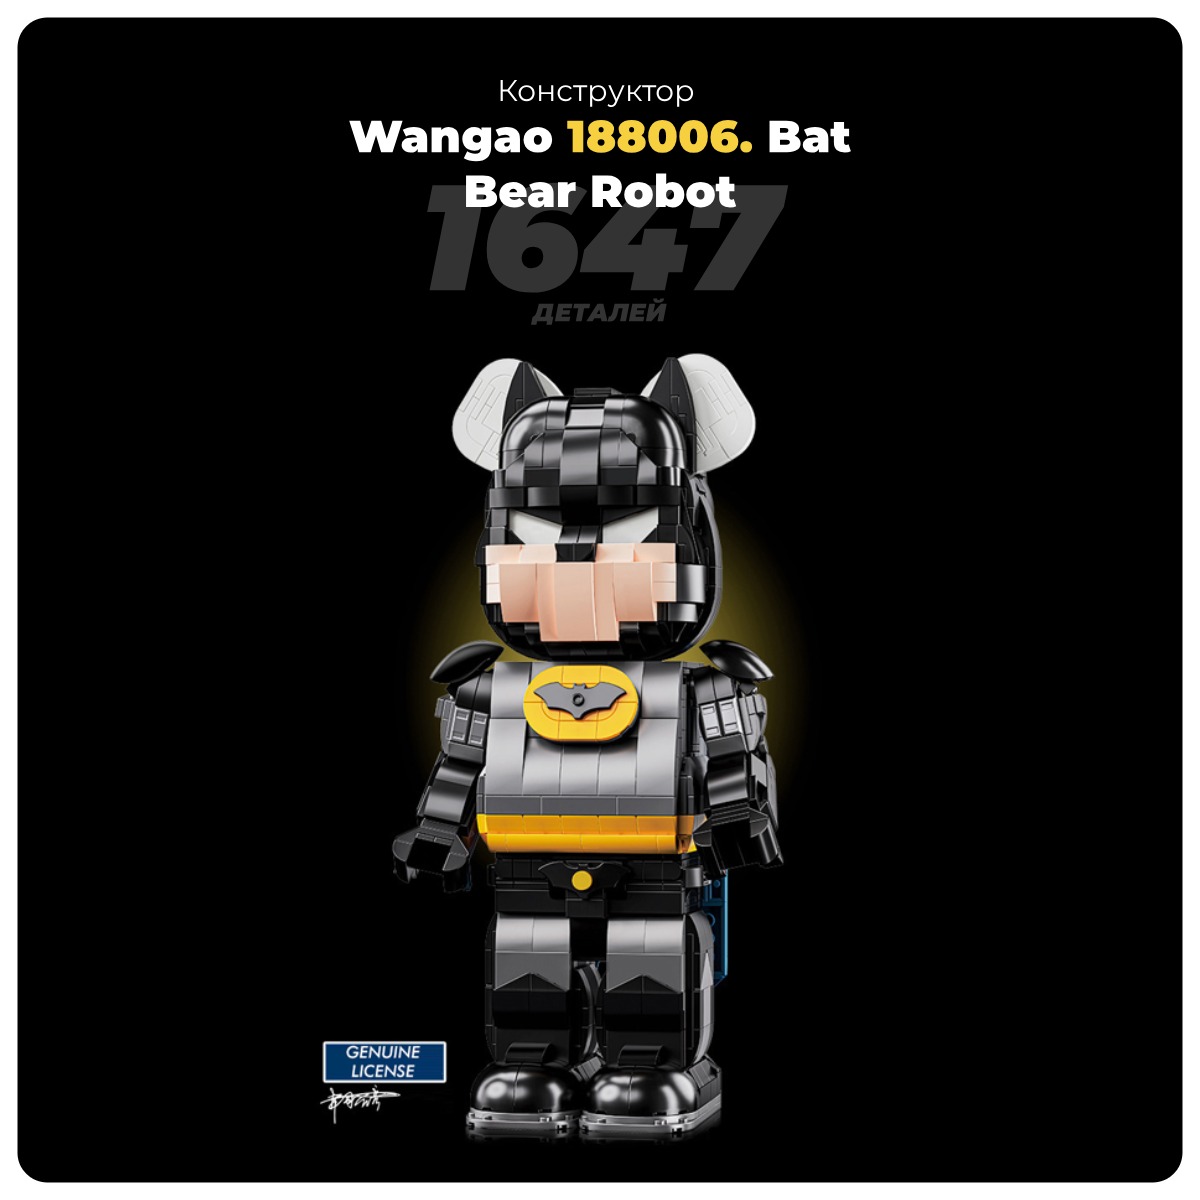 Wangao-188006-Bat-Bear-Robot-01